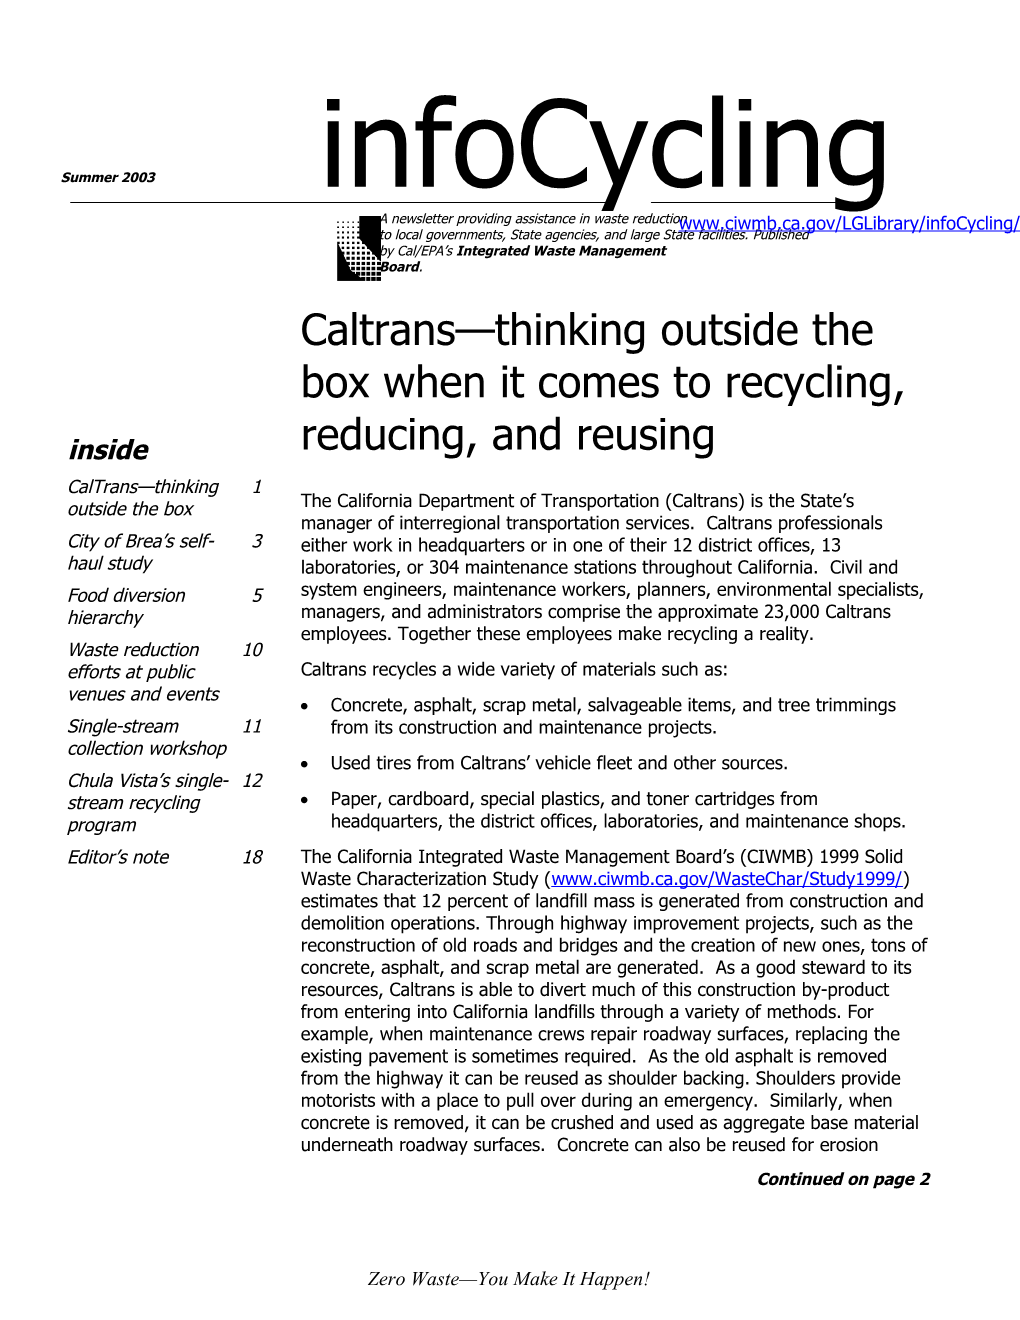 Infocycling, Summer 2003 Edition